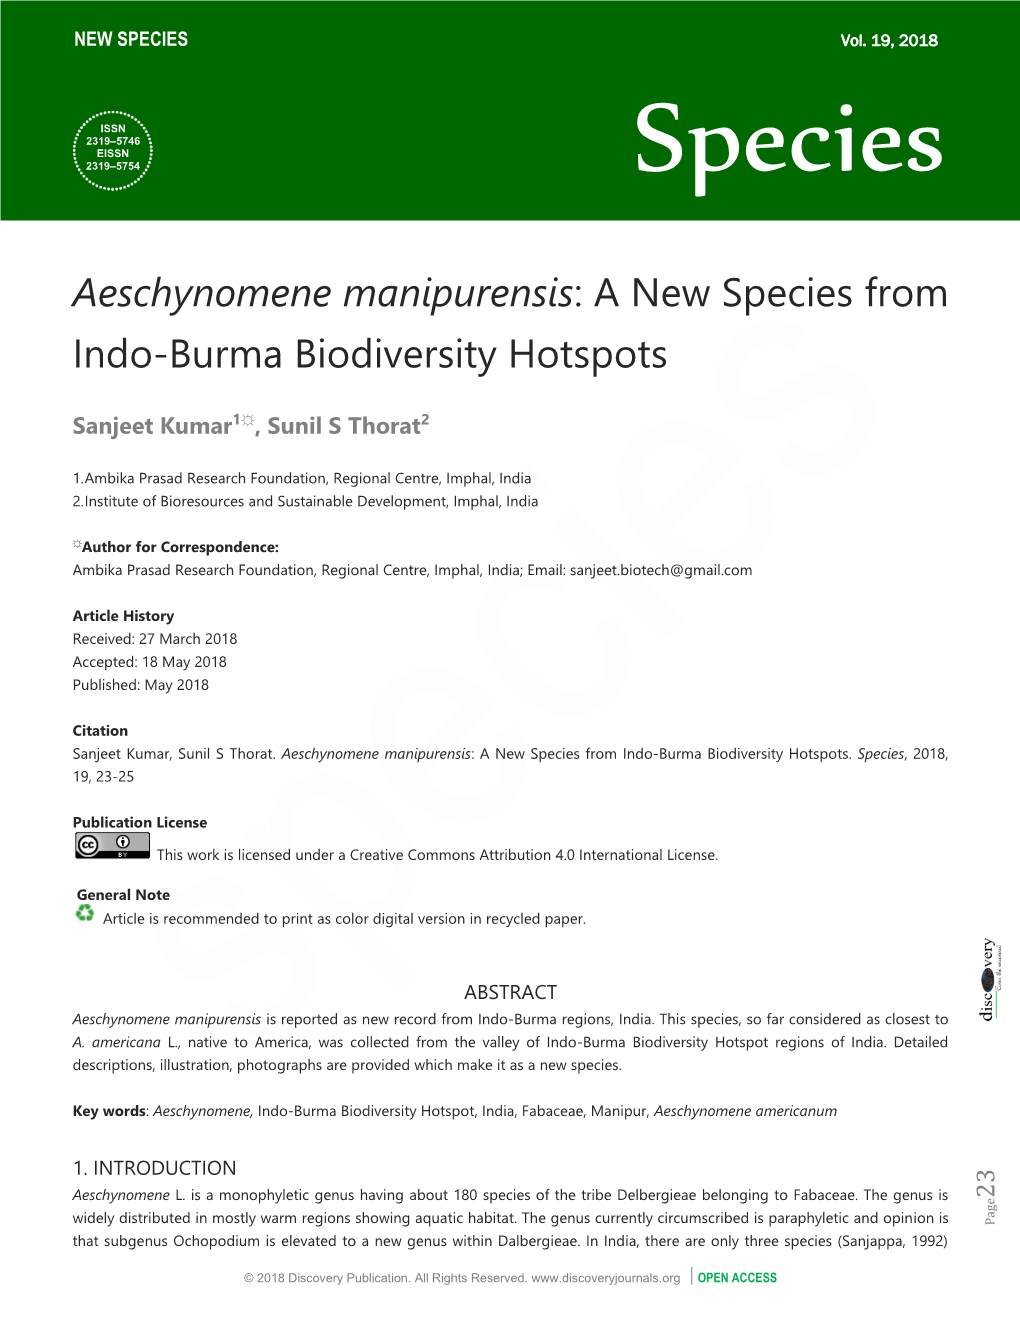 Aeschynomene Manipurensis: a New Species from Indo-Burma Biodiversity Hotspots